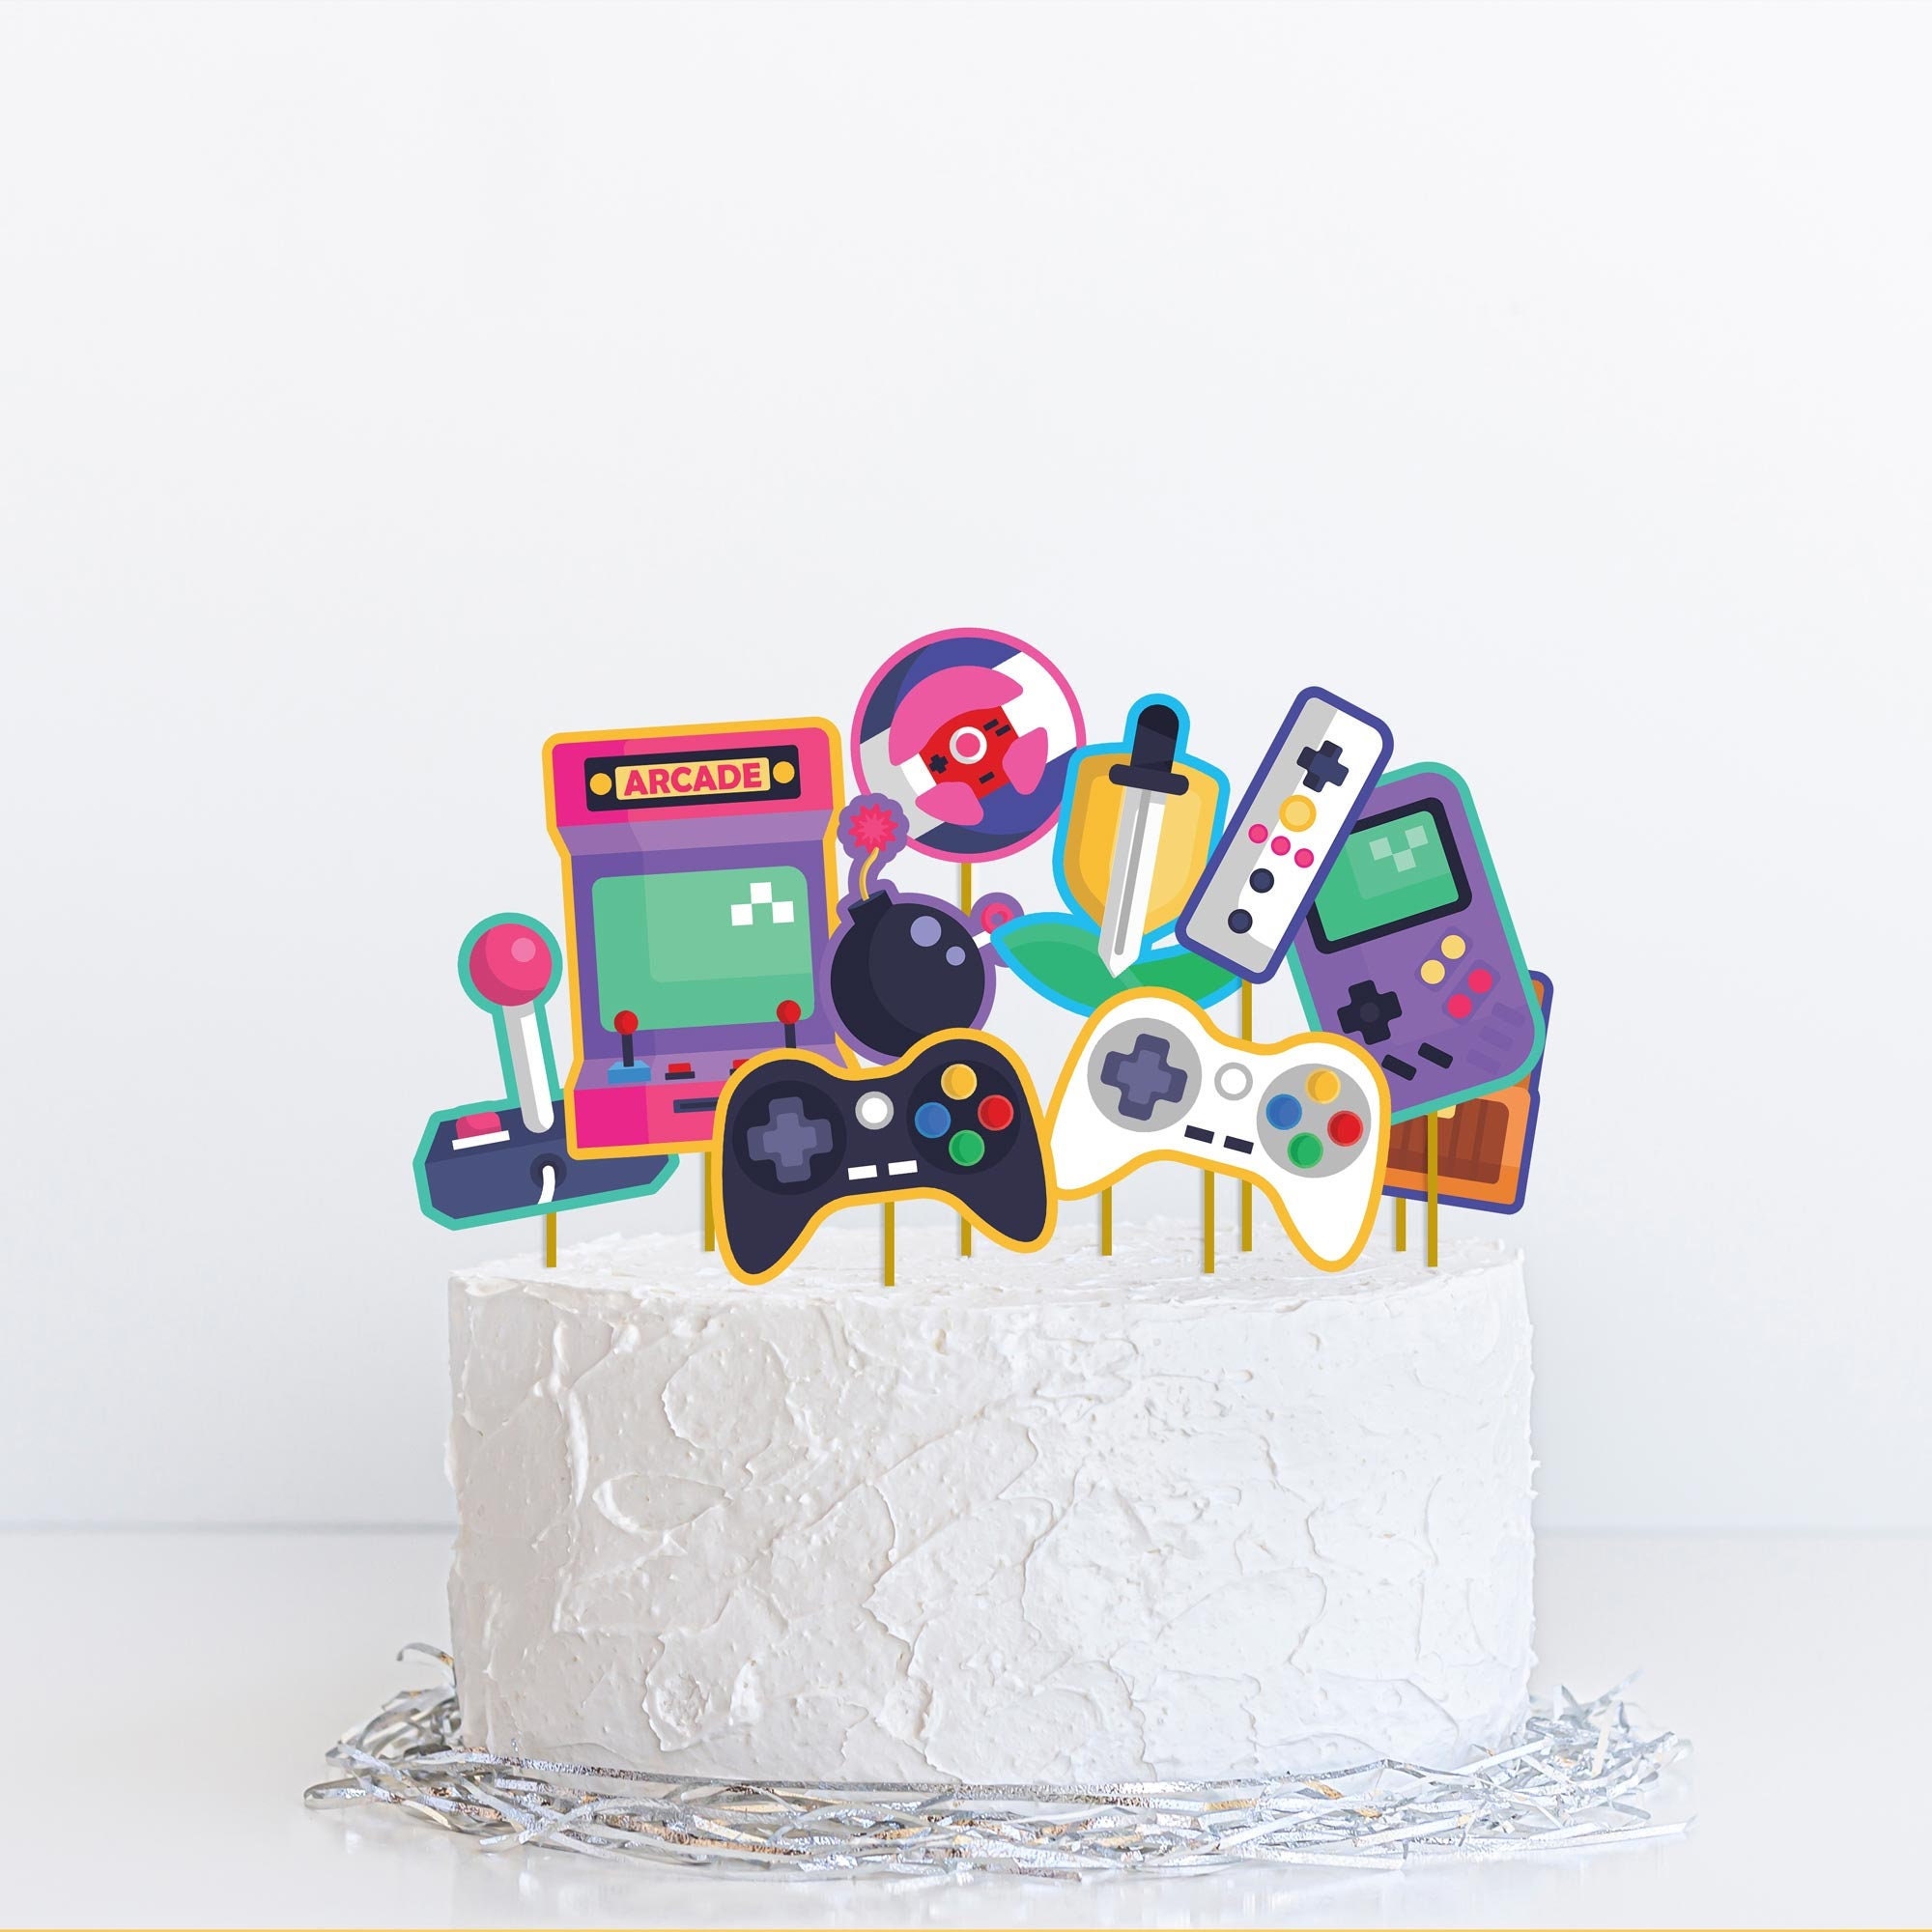  Video Game Cake Topper, Mining Theme Happy Birthday